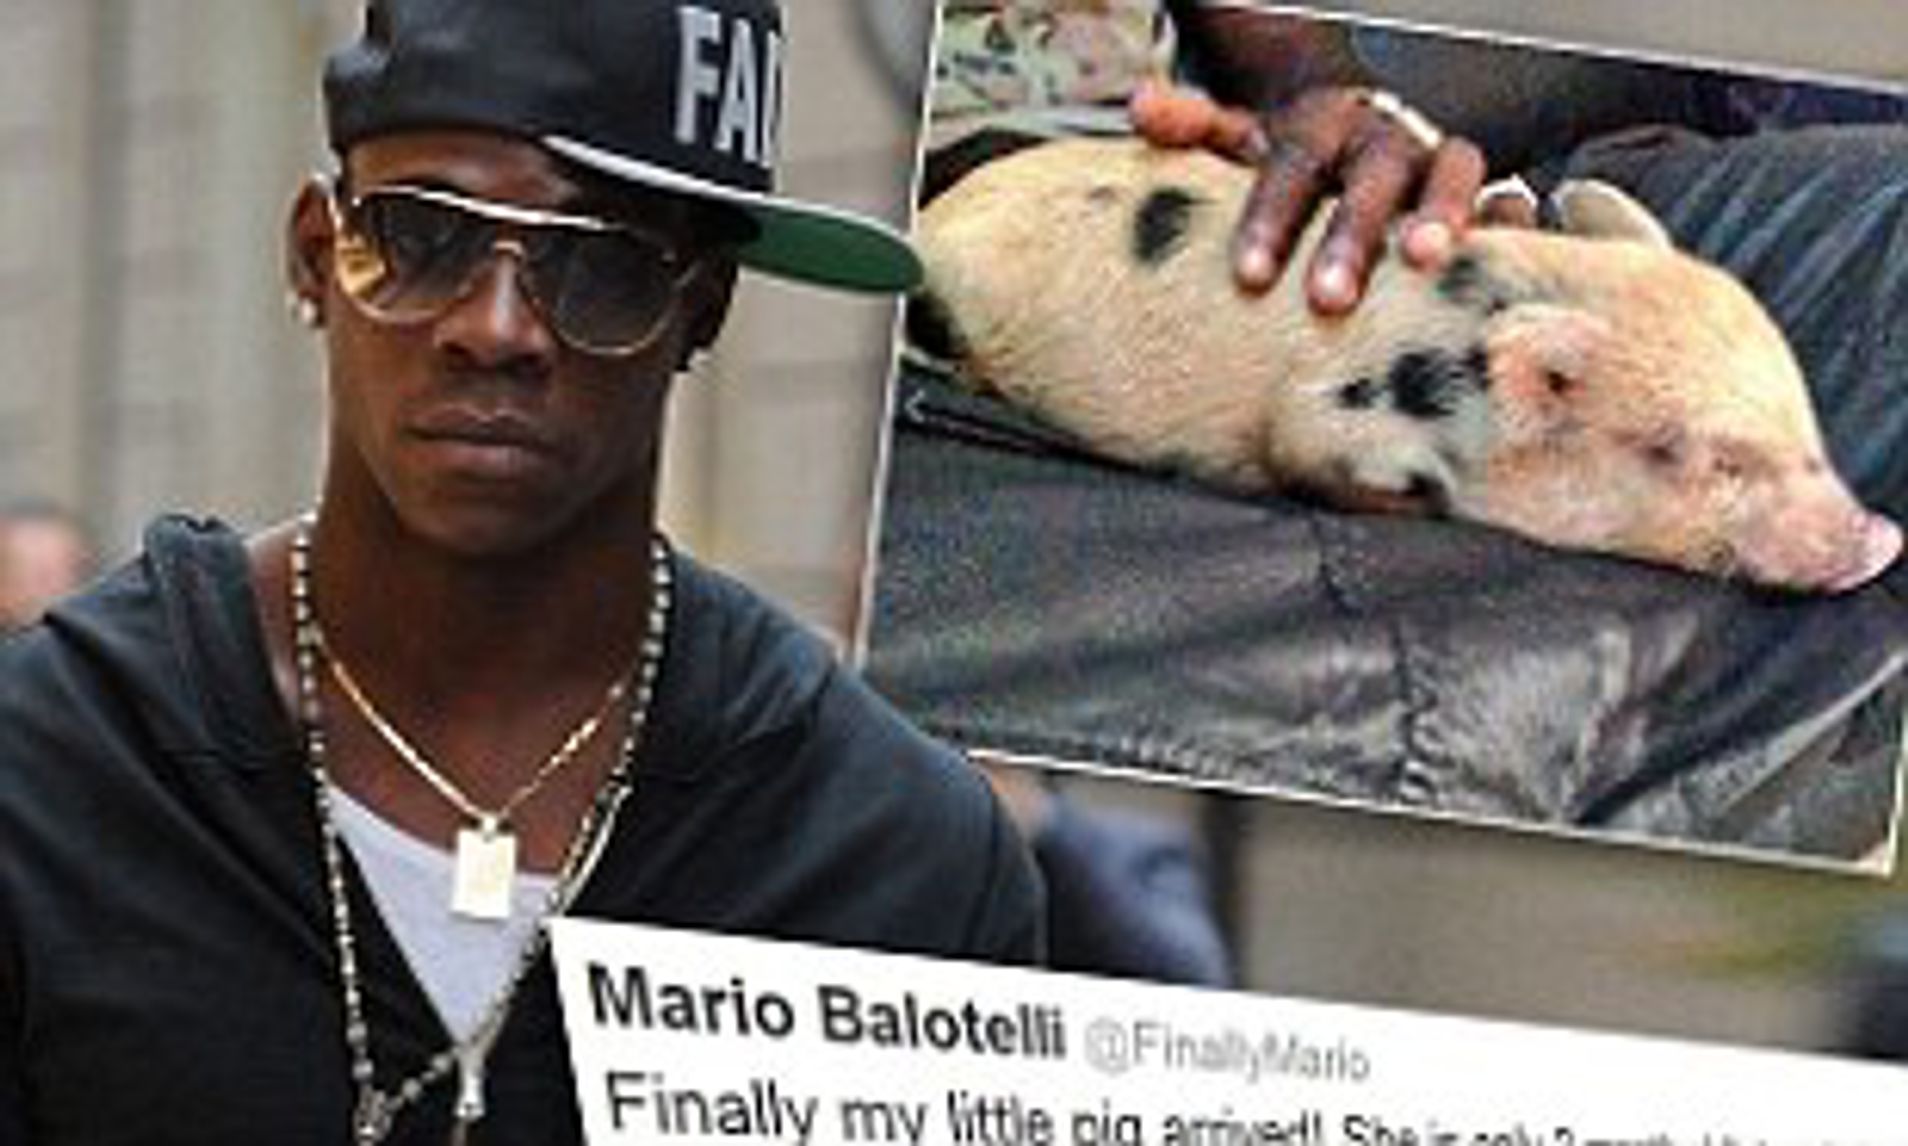 Mario Balotelli gets a pet pig